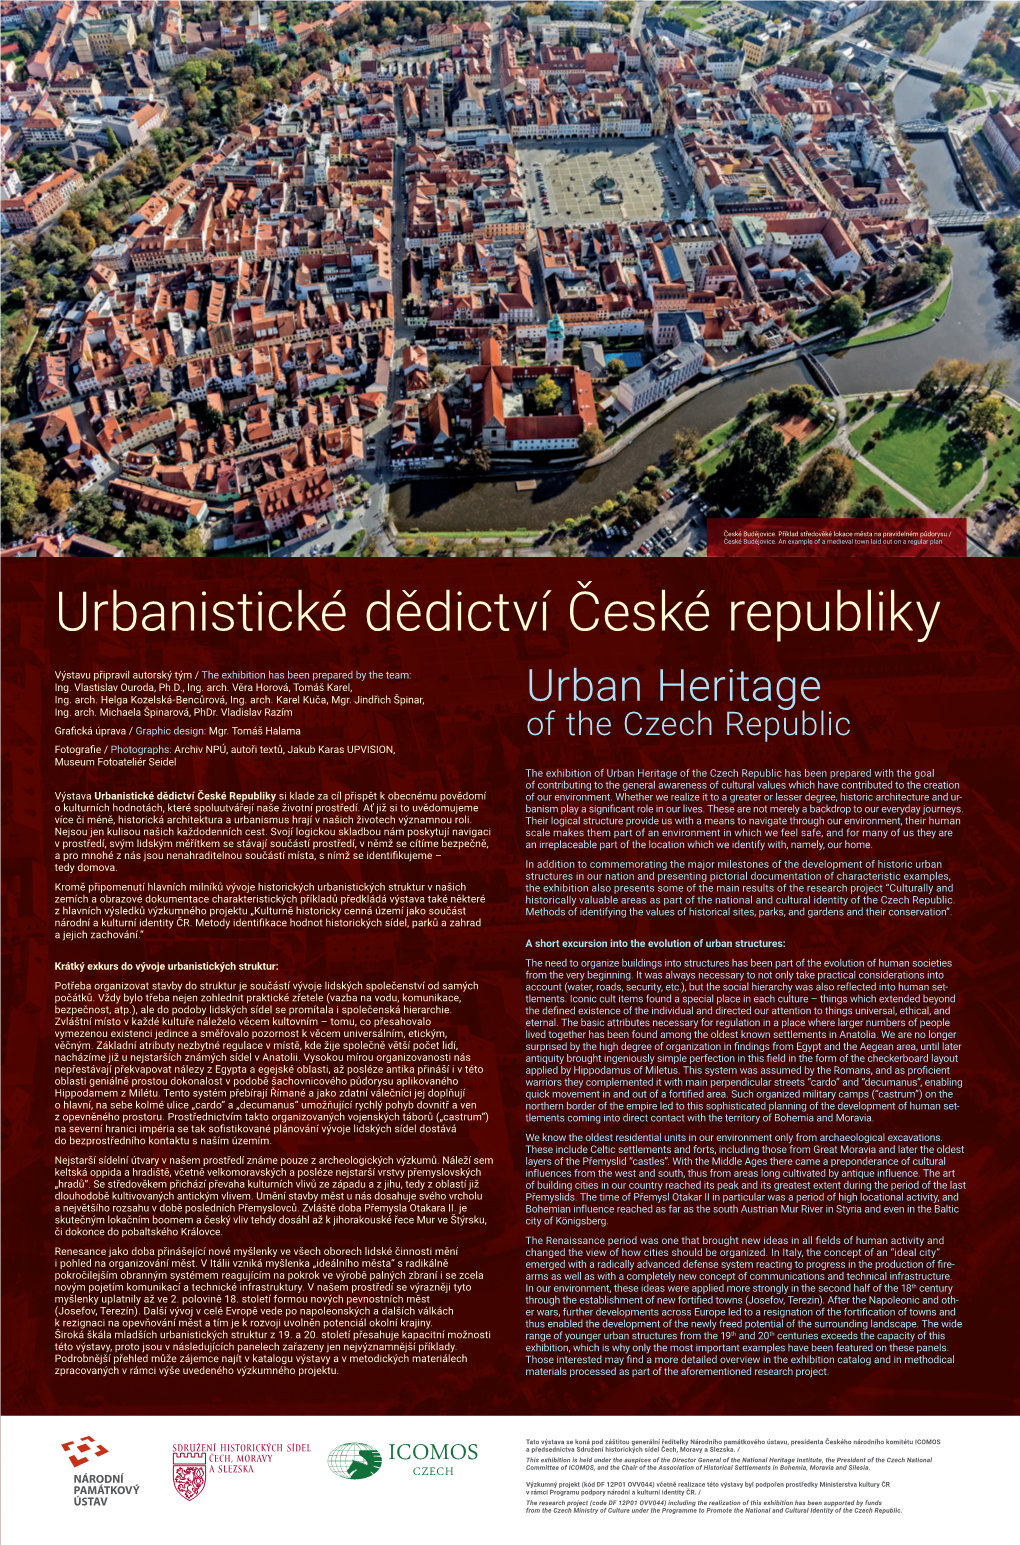 Of the Czech Republic